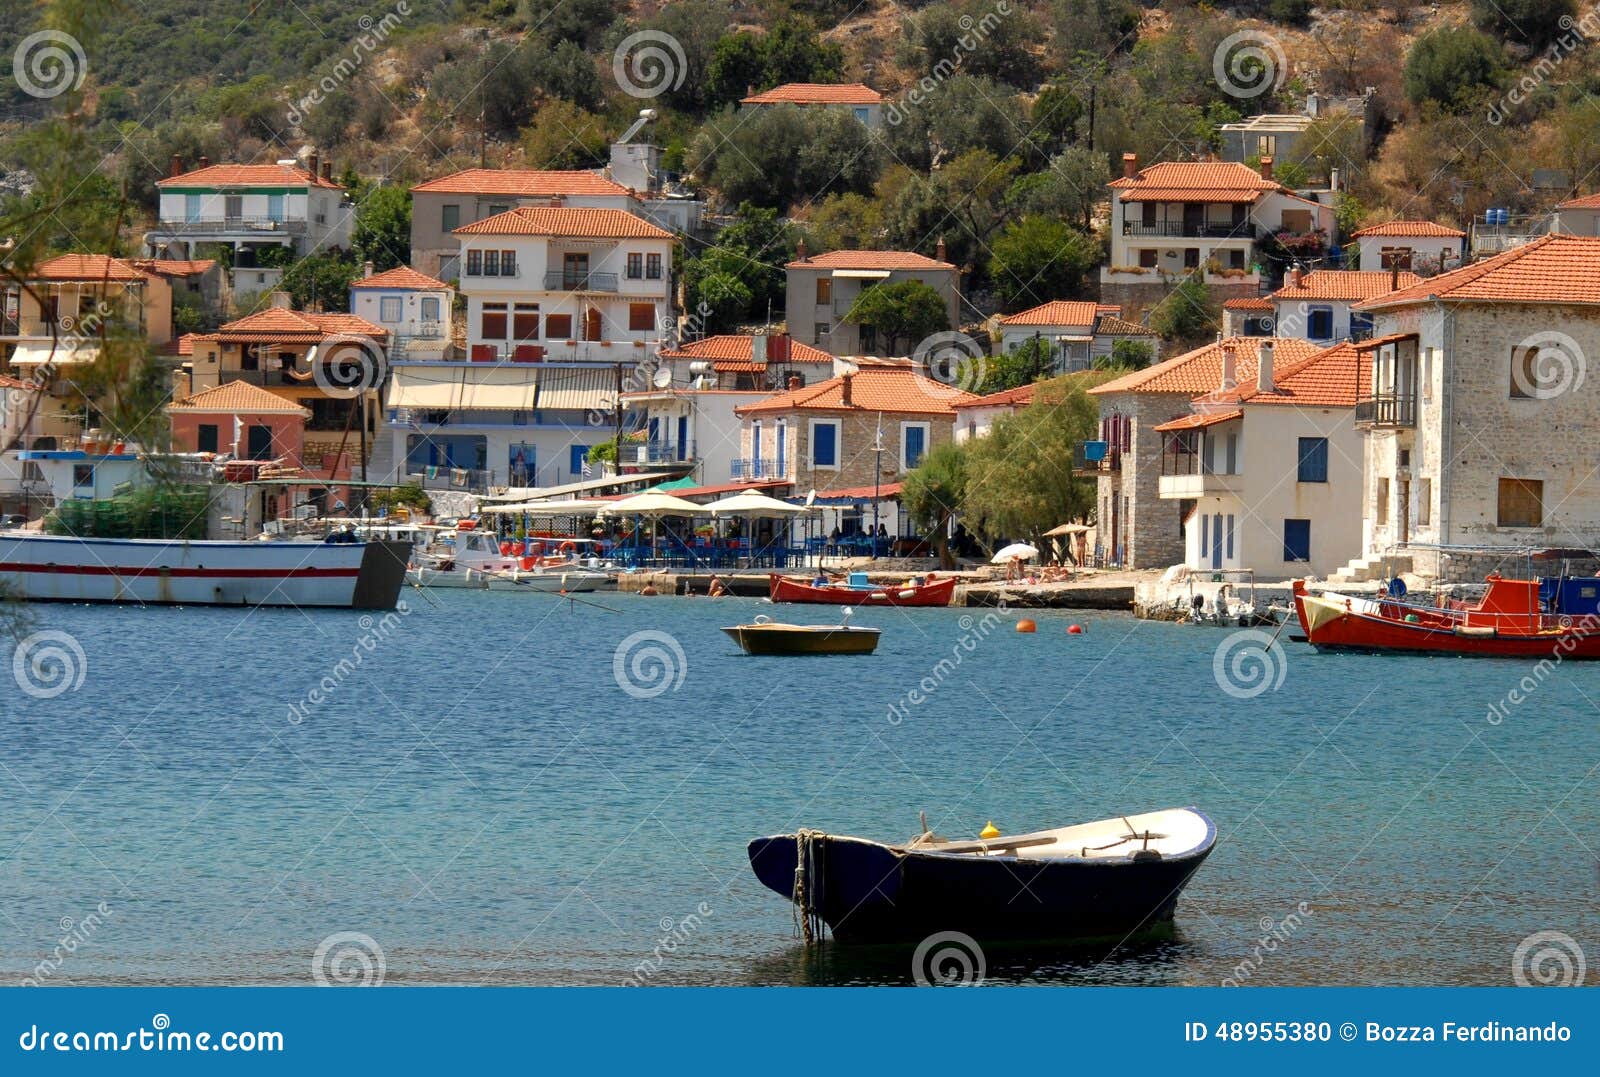 Greece stock photo. Image of sandy, offer, greece, peninsula - 48955380